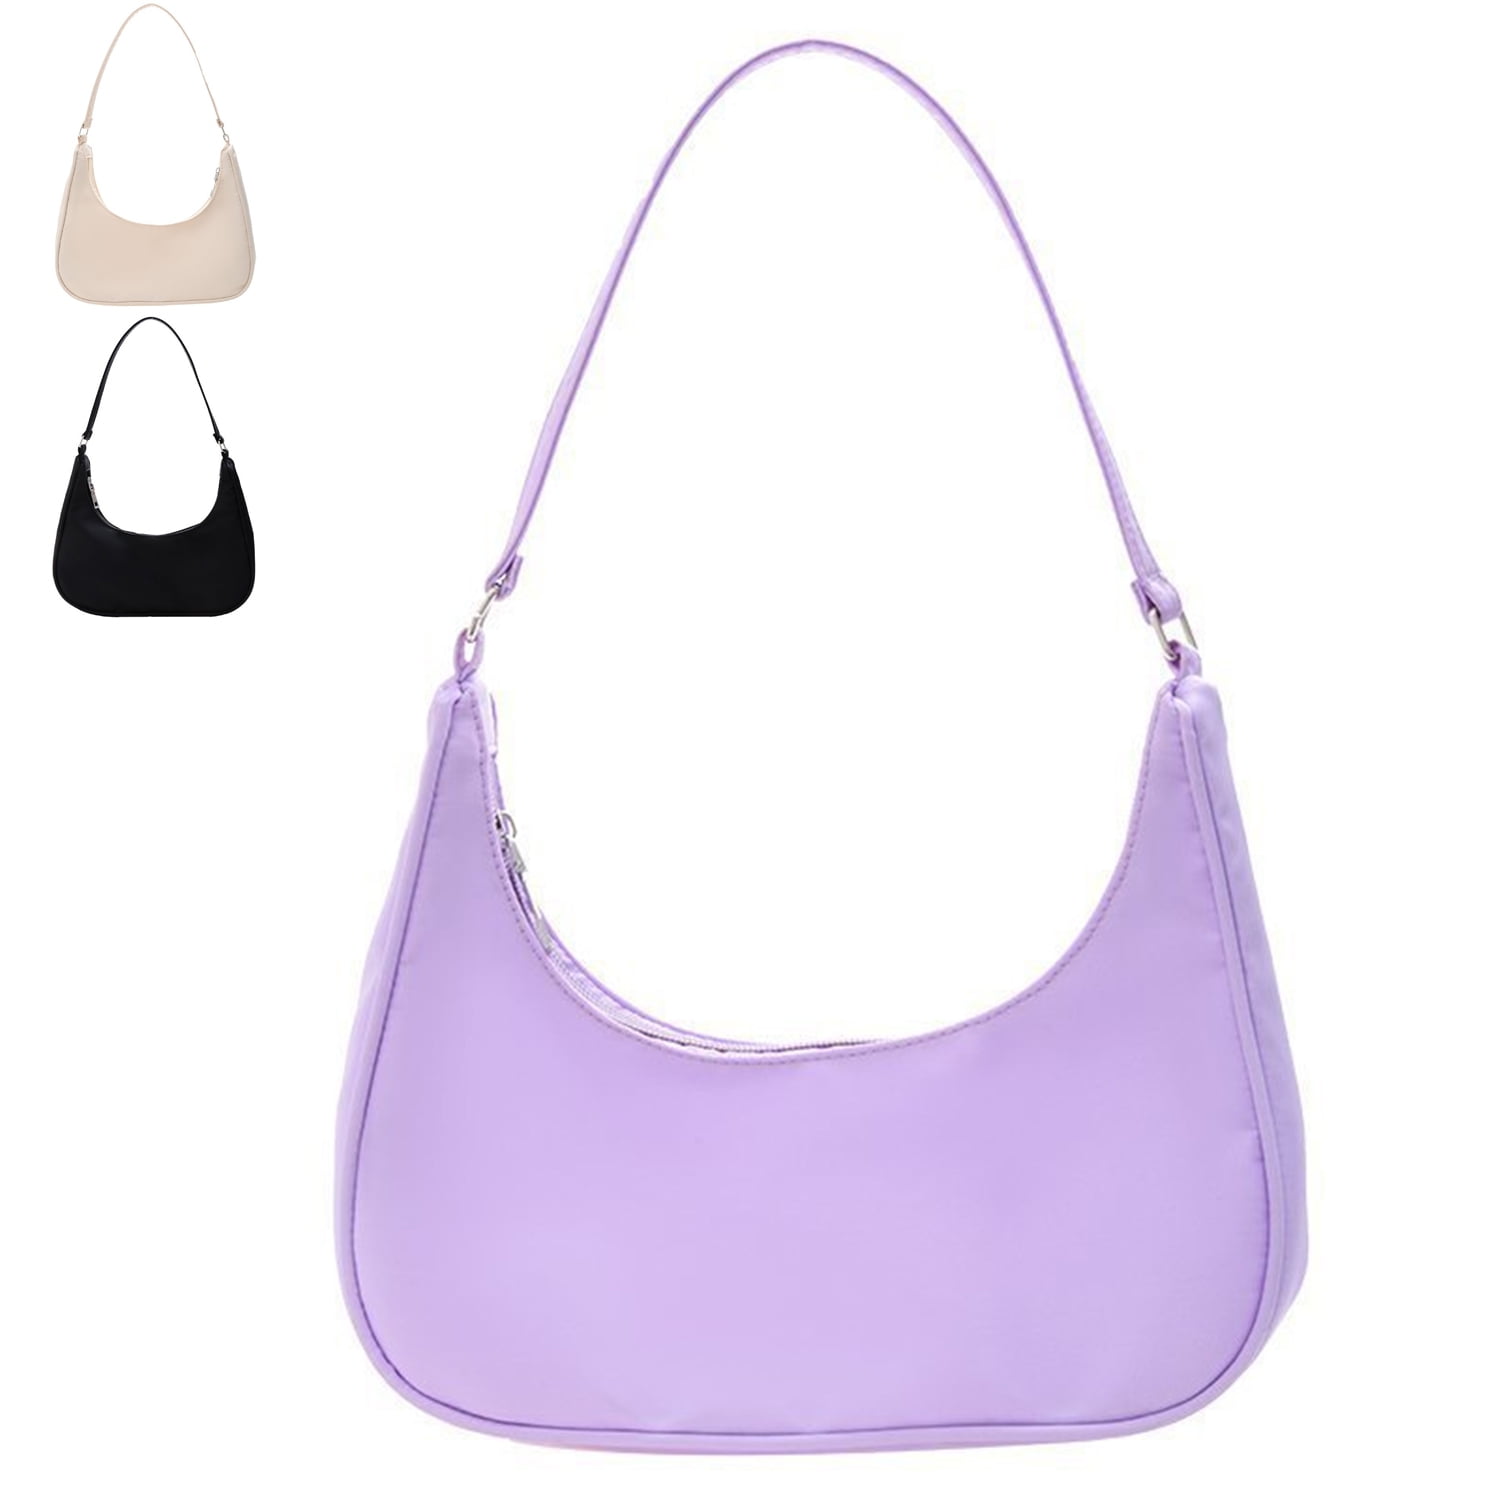 Purple handbag Vectors & Illustrations for Free Download | Freepik